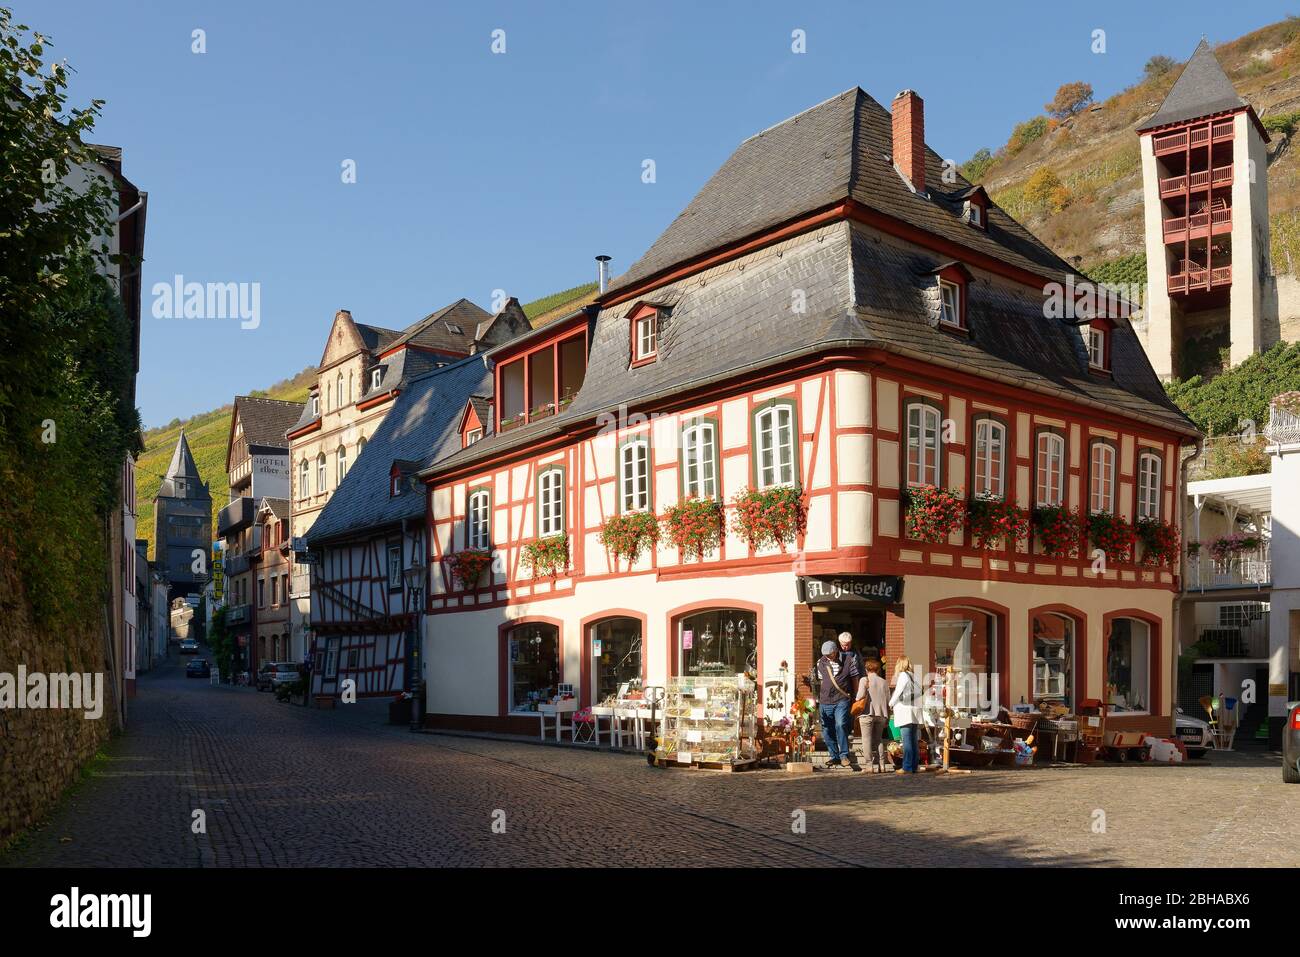 Upper Street avec maisons à colombages à Bacharach am Rhein, Bacharach, vallée du Rhin, UNESCO World Heritage Upper Middle Rhin Valley, Rhénanie-Palatinat, Allemagne Banque D'Images